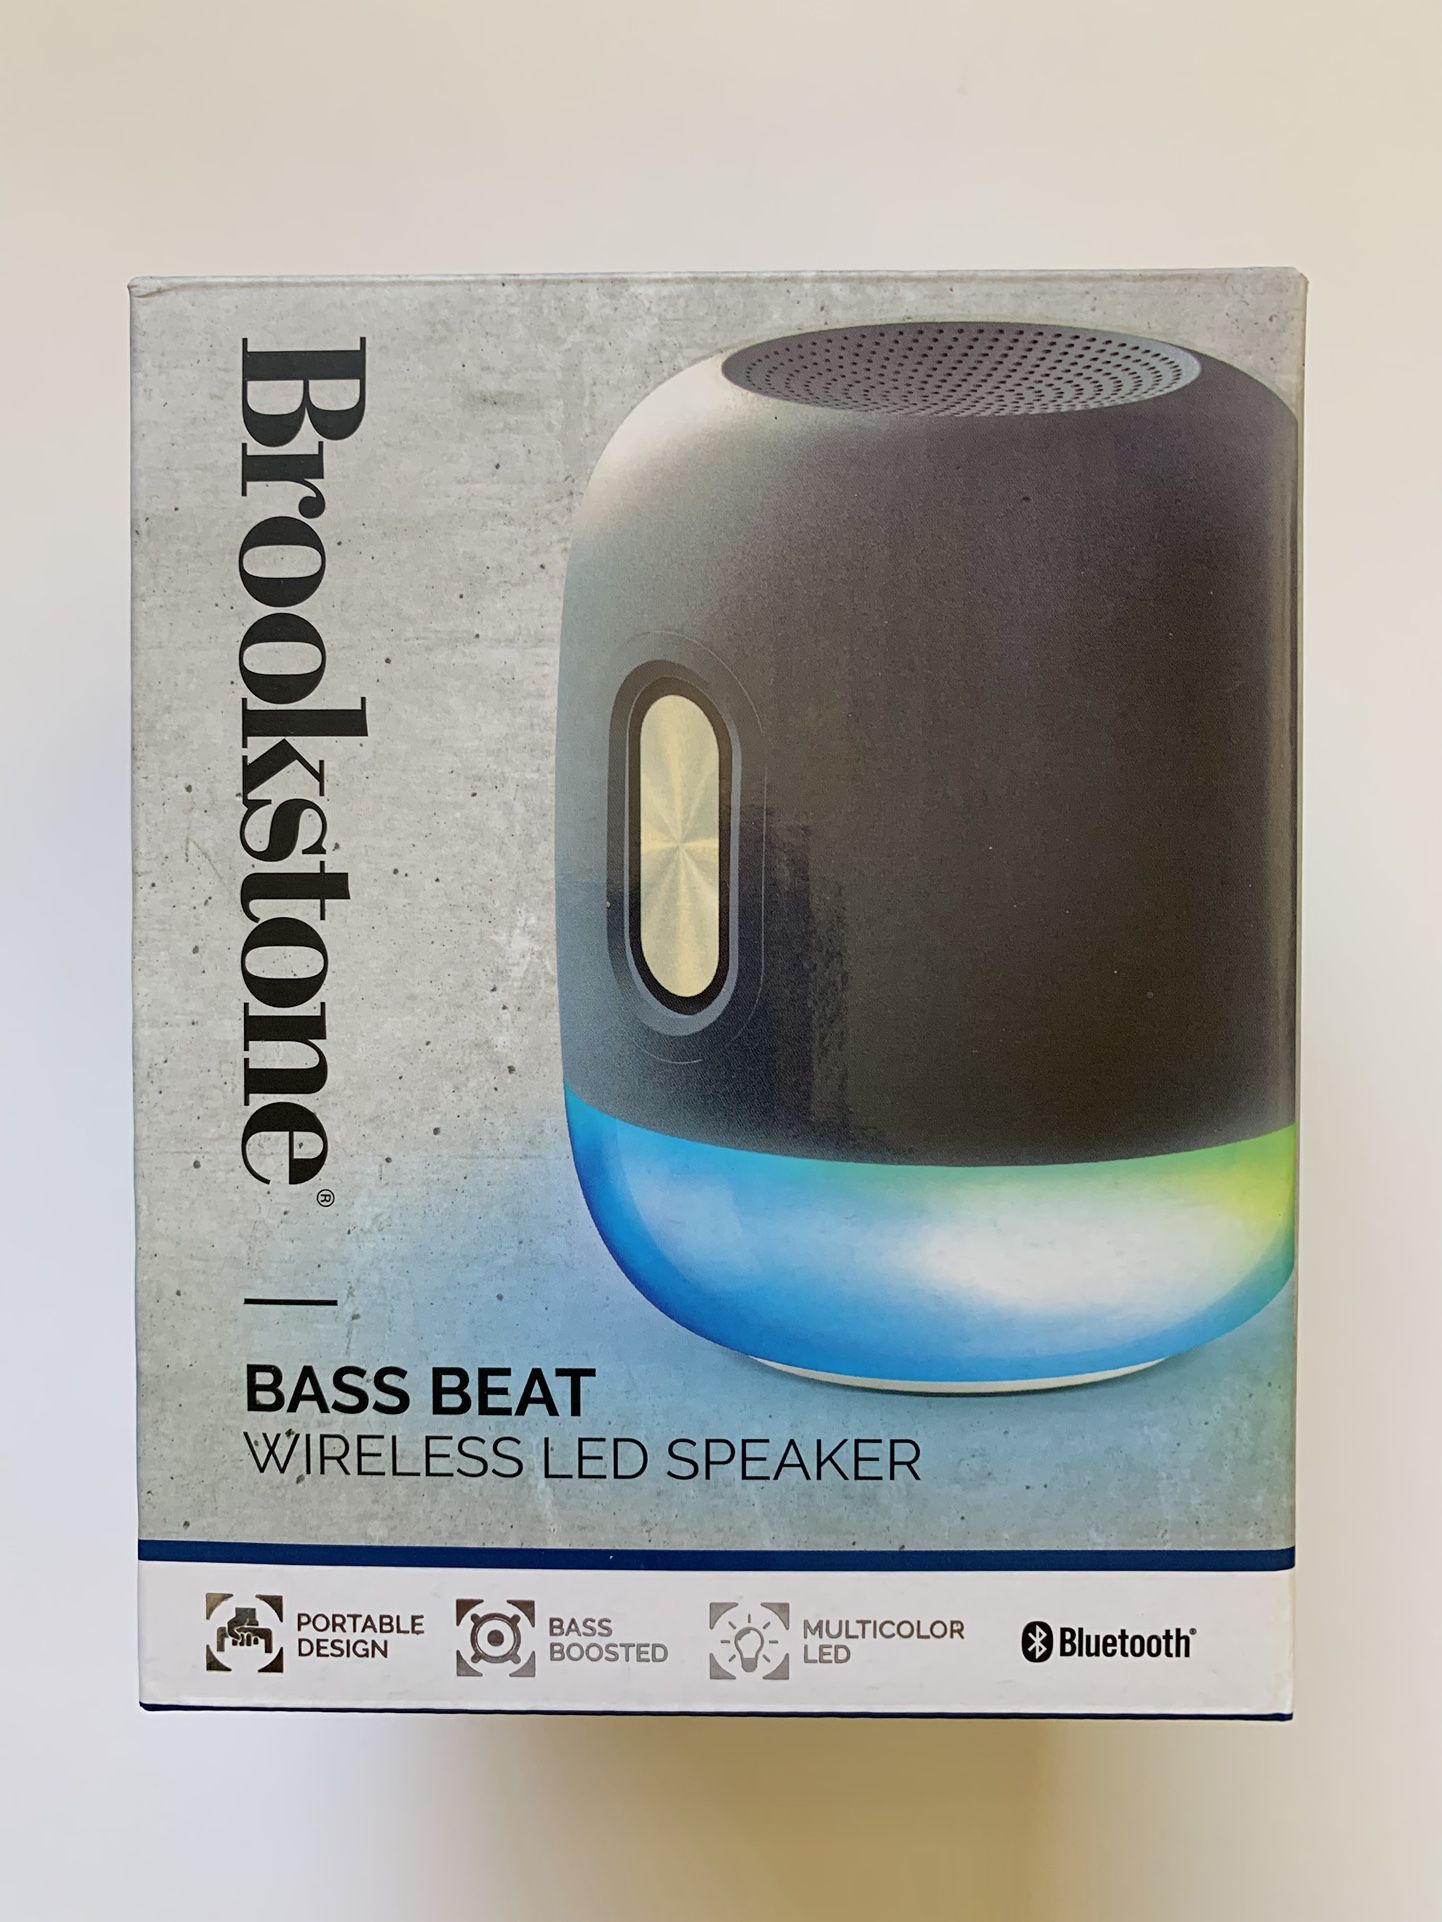 Brookstone "Base Beat" wireless LED speaker